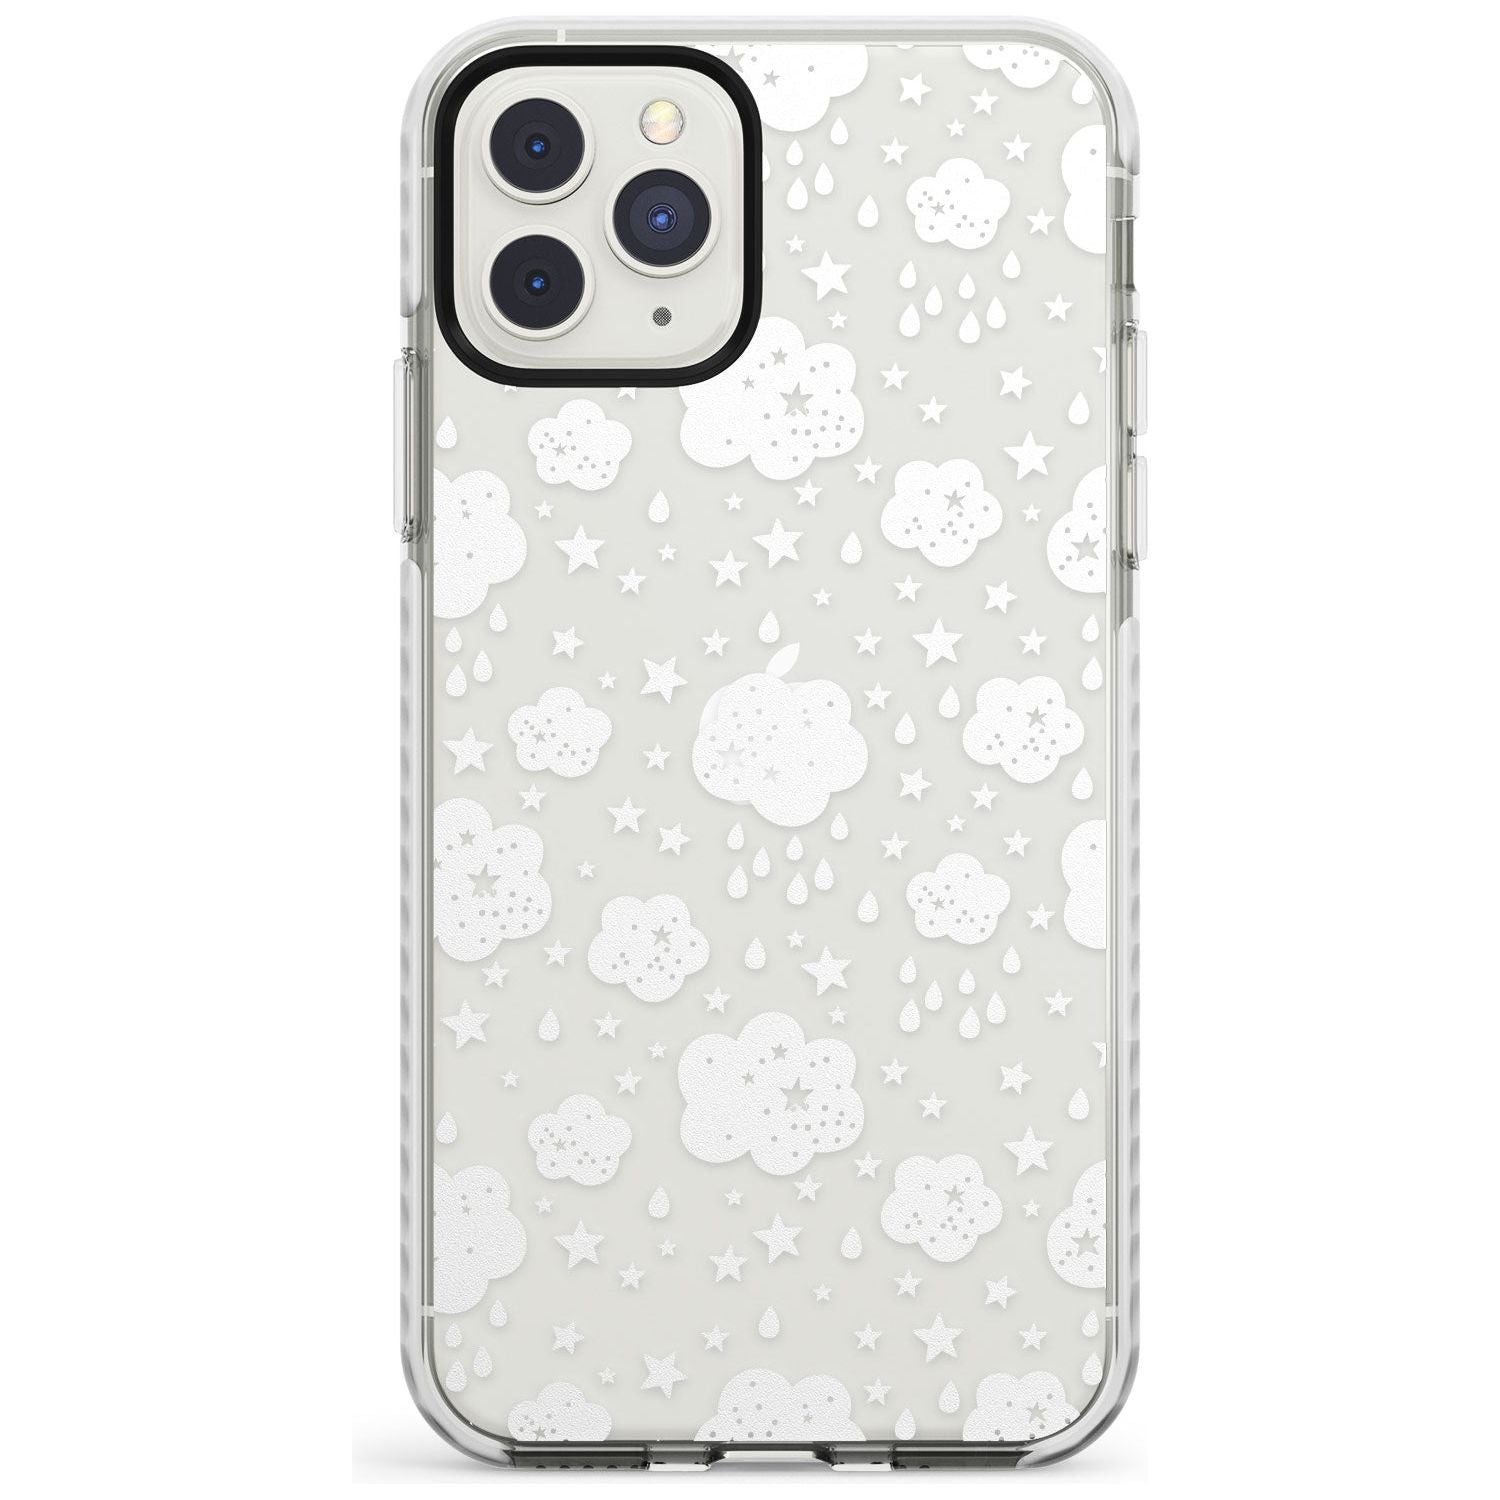 Rainy Days Impact Phone Case for iPhone 11 Pro Max